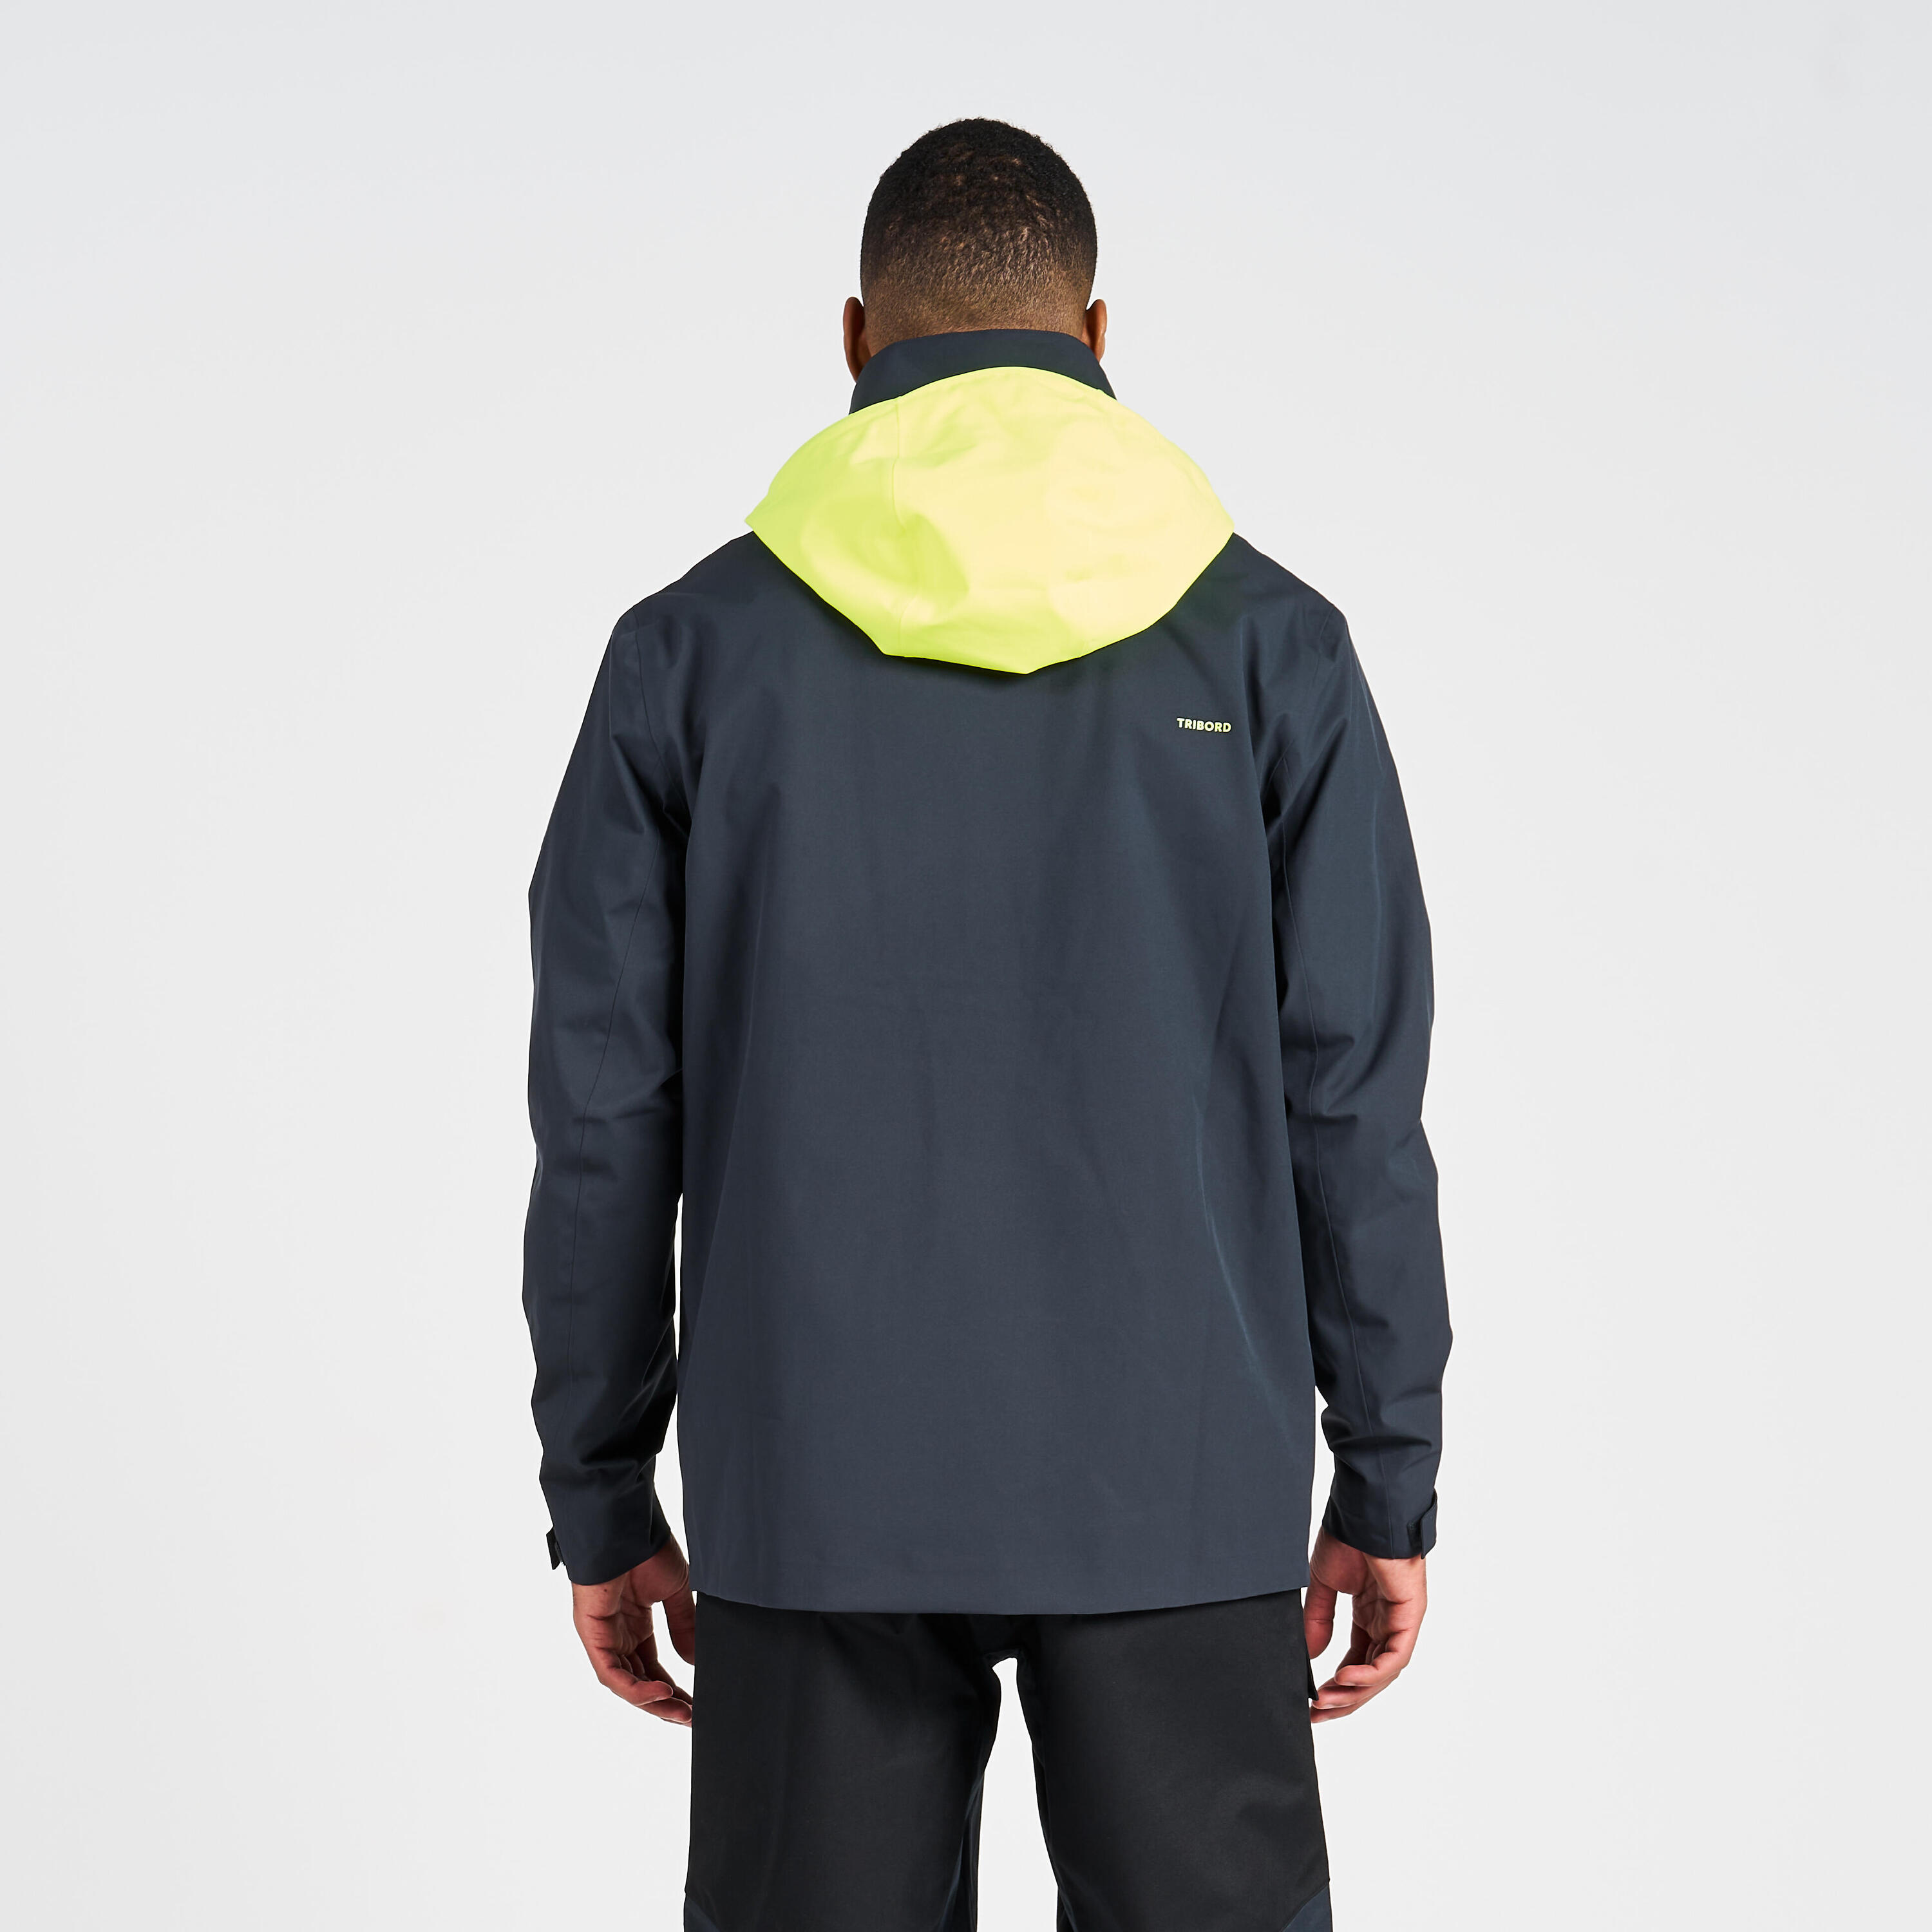 Men's sailing waterproof windproof jacket SAILING 300 Dark grey Yellow hood 3/12